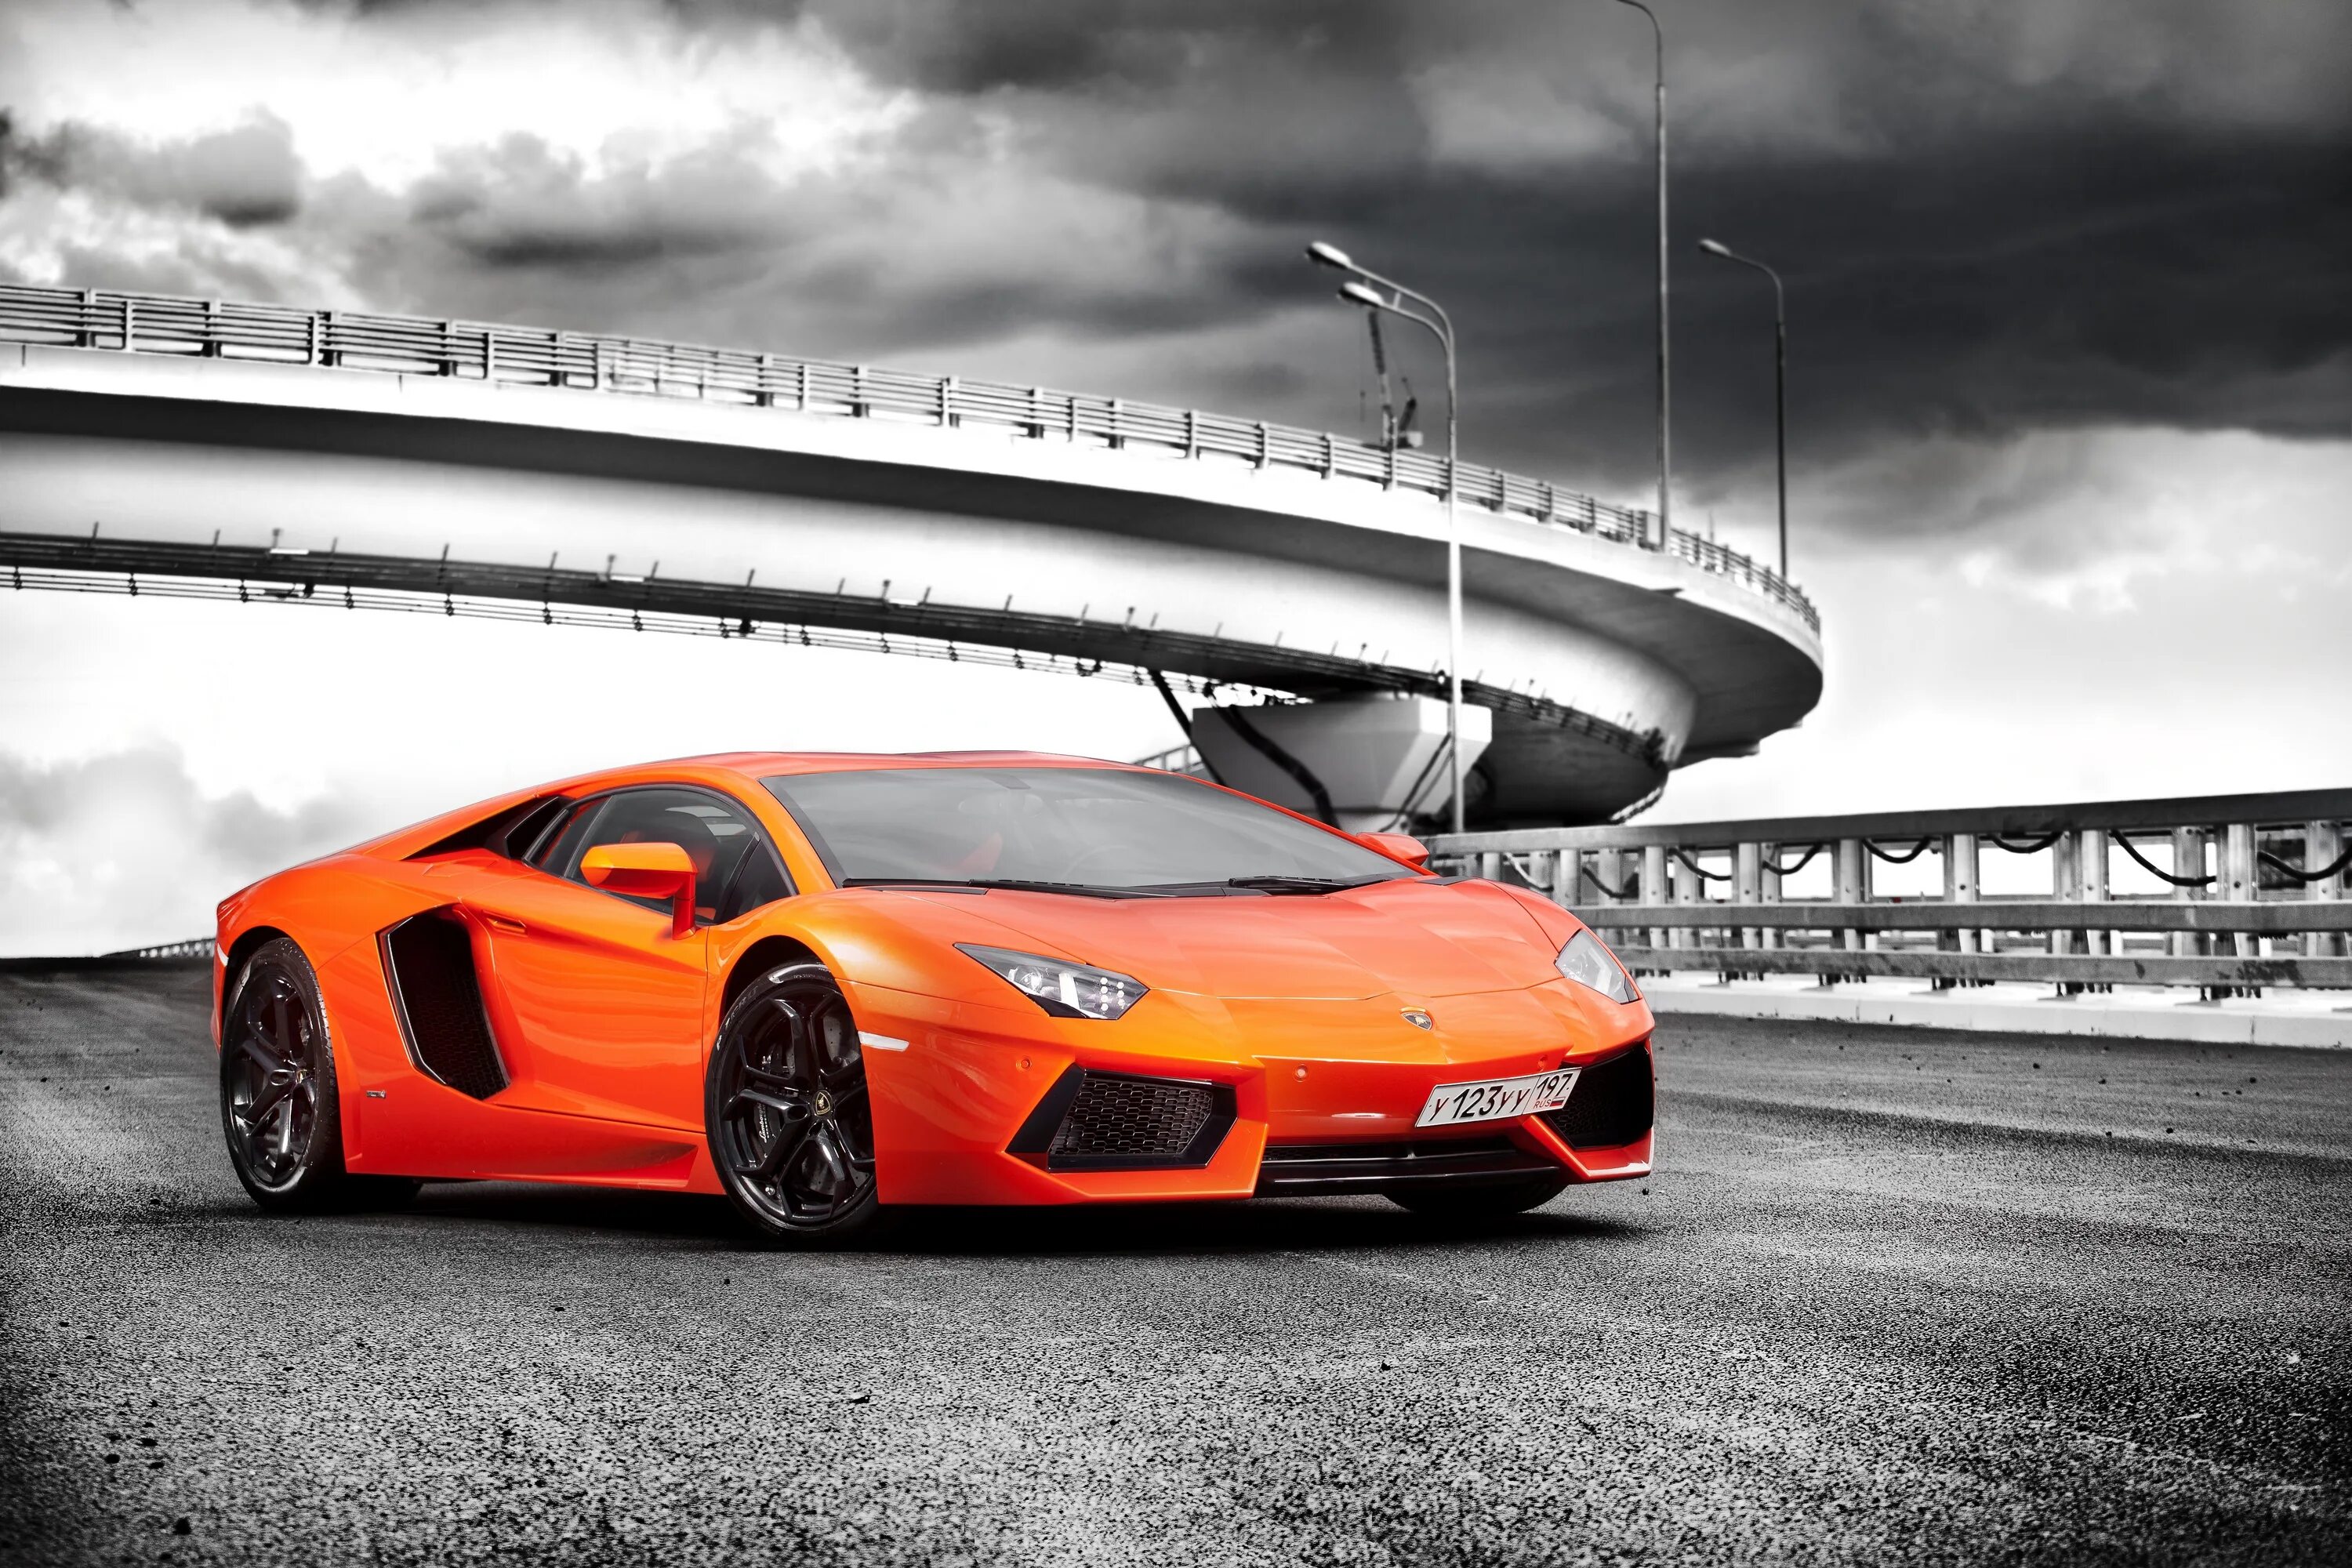 Фото на заставку телефона машины. Ламборгини авентадор оранжевый. Lamborghini, Orange, Aventador, lp700-4. Lamborghini Aventador lp700-4. Lamborghini Aventador оранжевая.